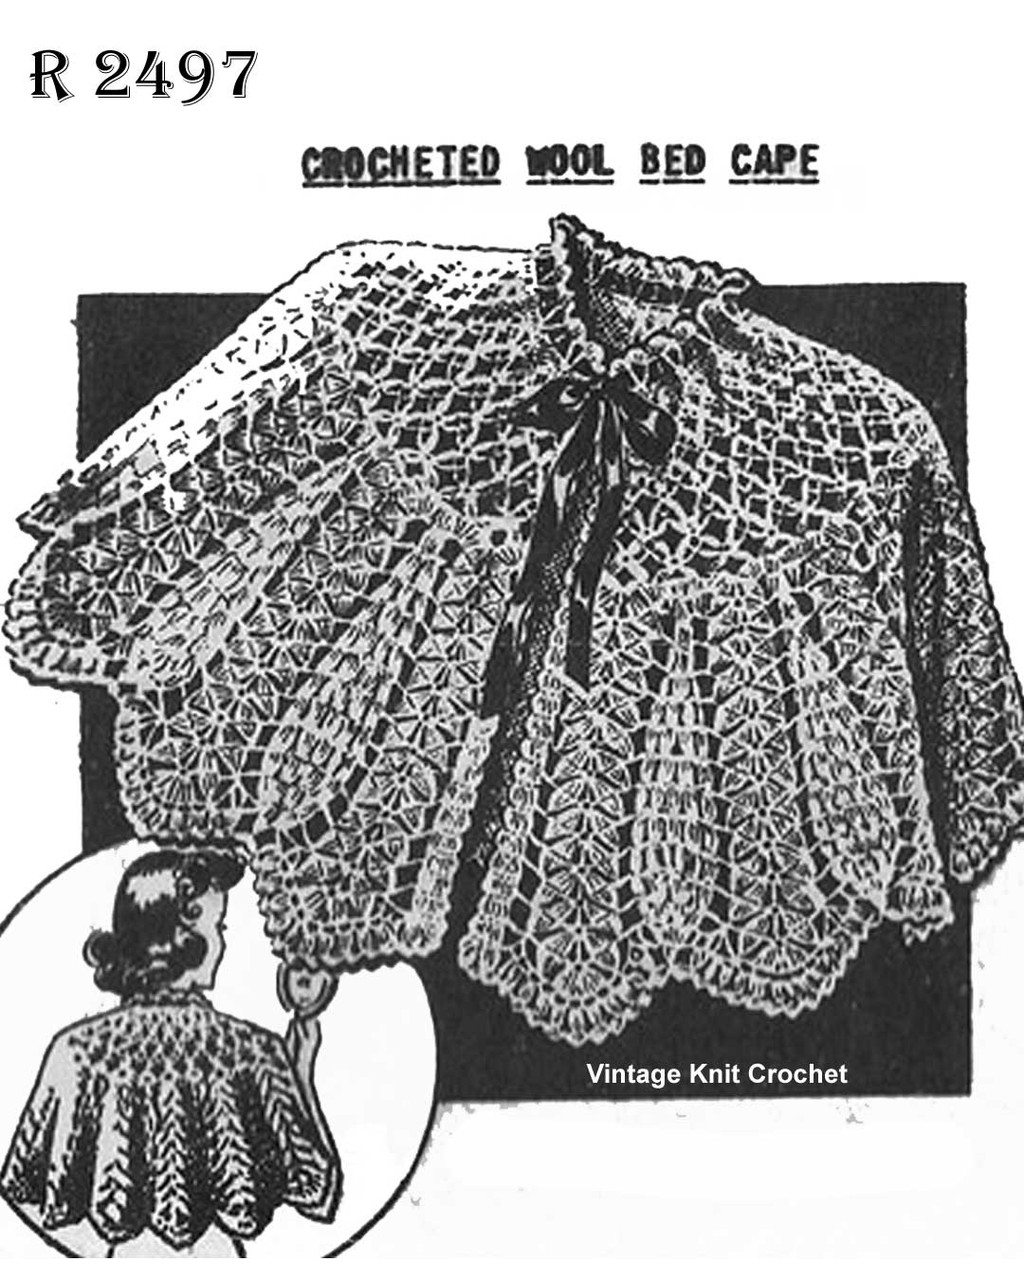 Vintage Crochet Bed Jacket Pattern No R2497